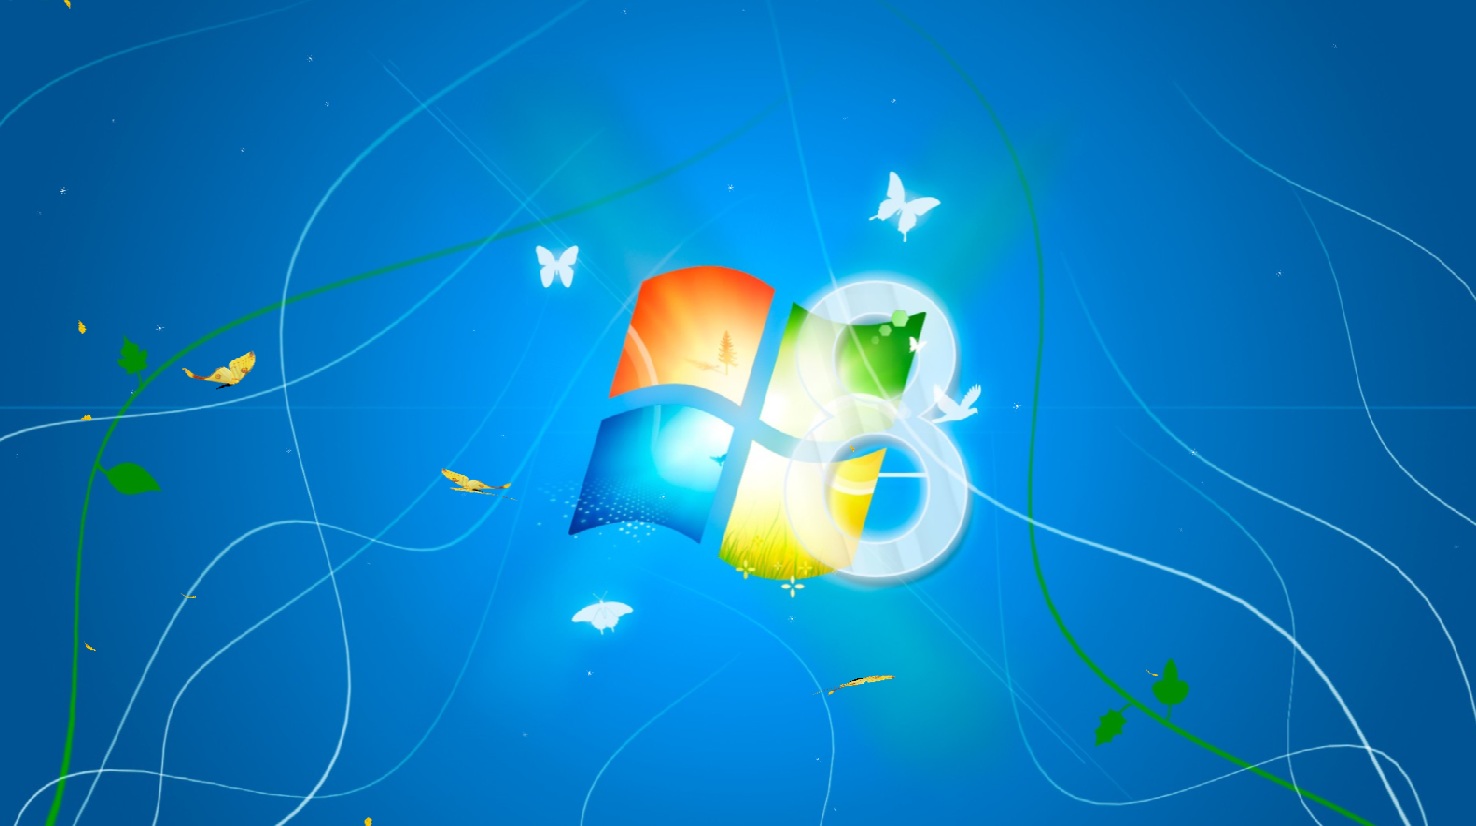 Windows Light Animated Wallpaper Full Screenshot